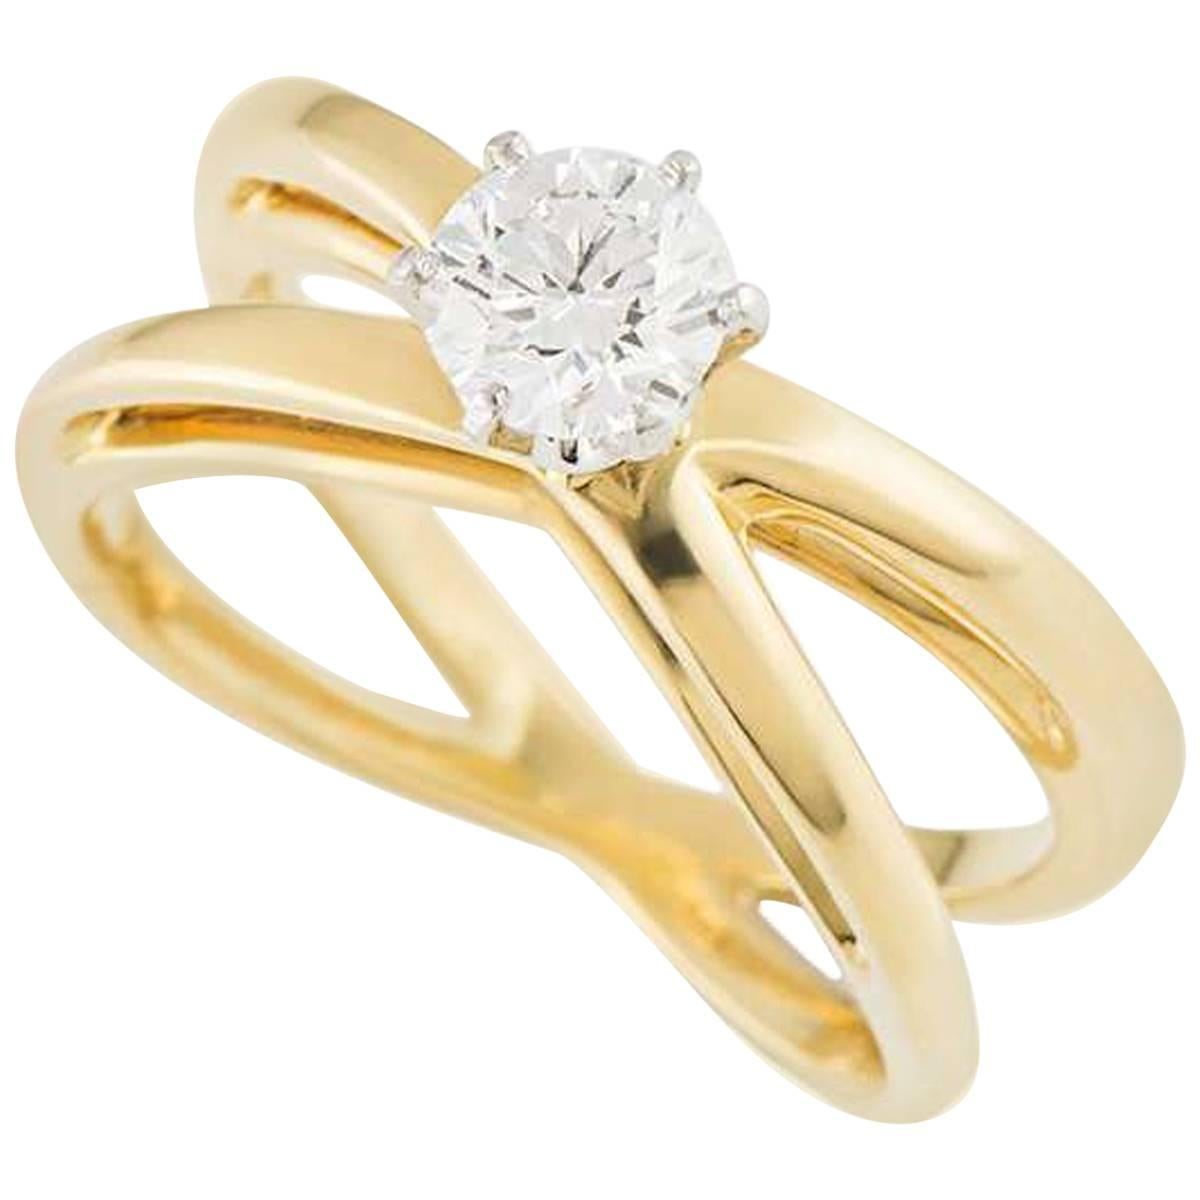 Tiffany & Co. Crossover Diamond Ring .40 carat